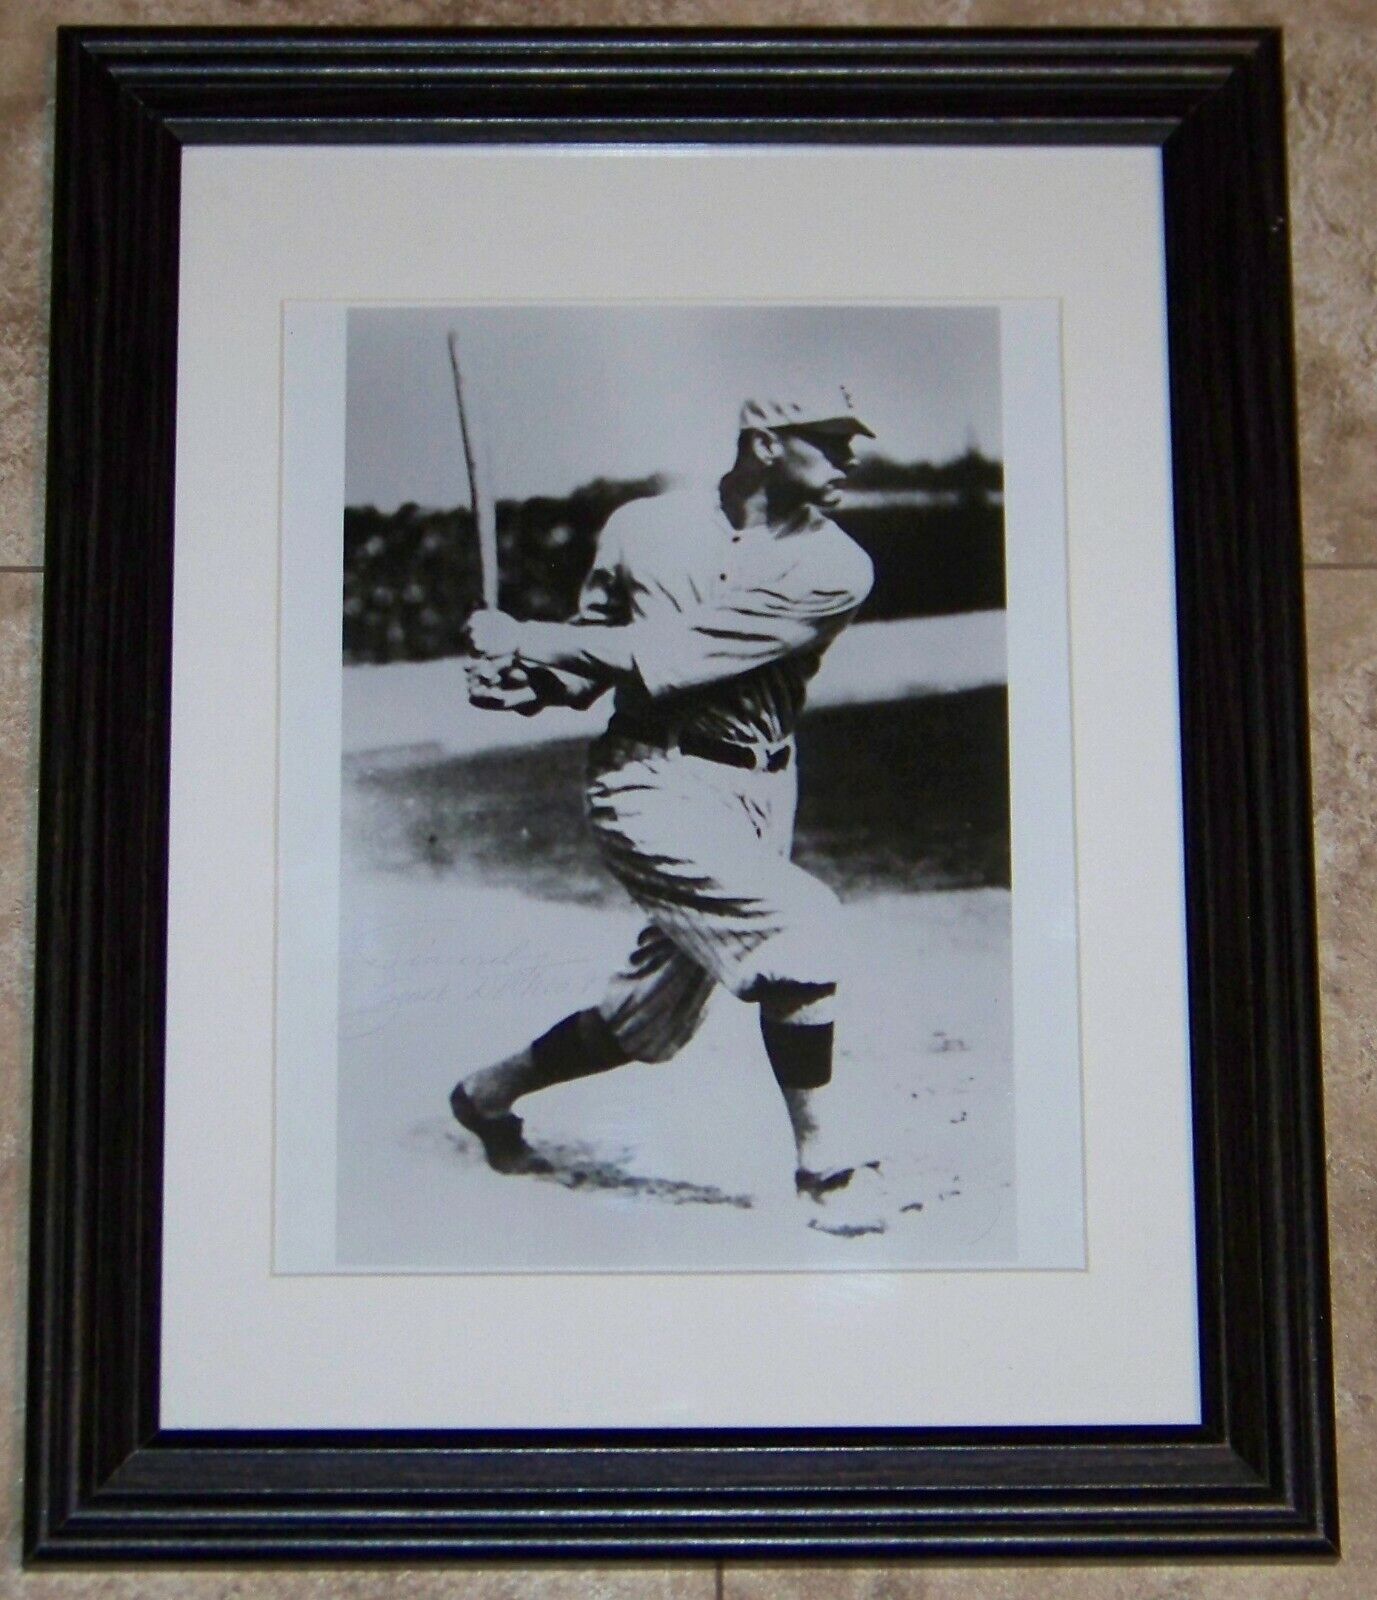 EXTREMELY RARE! Zack Wheat Signed Autographed Baseball 8x10 Photo Poster painting JSA COA!